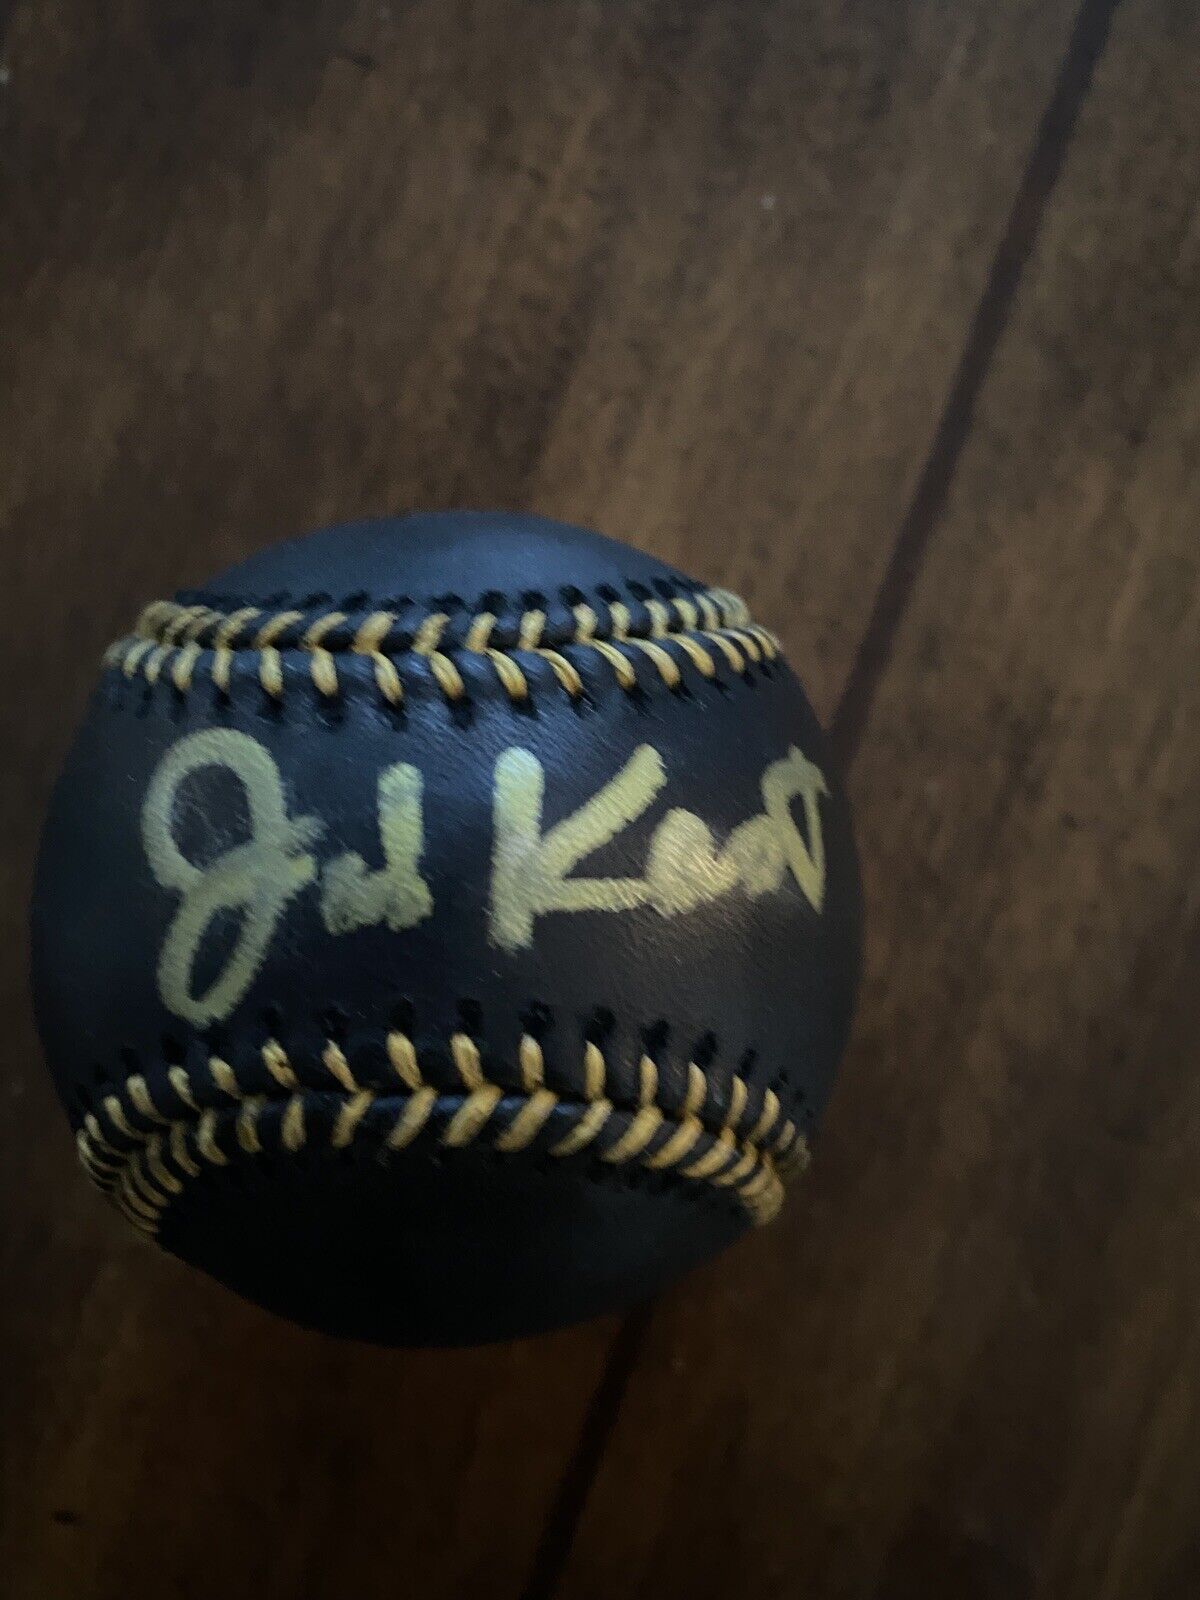 Jim Kaat Autographed Baseball Great Condition-HOF Auto